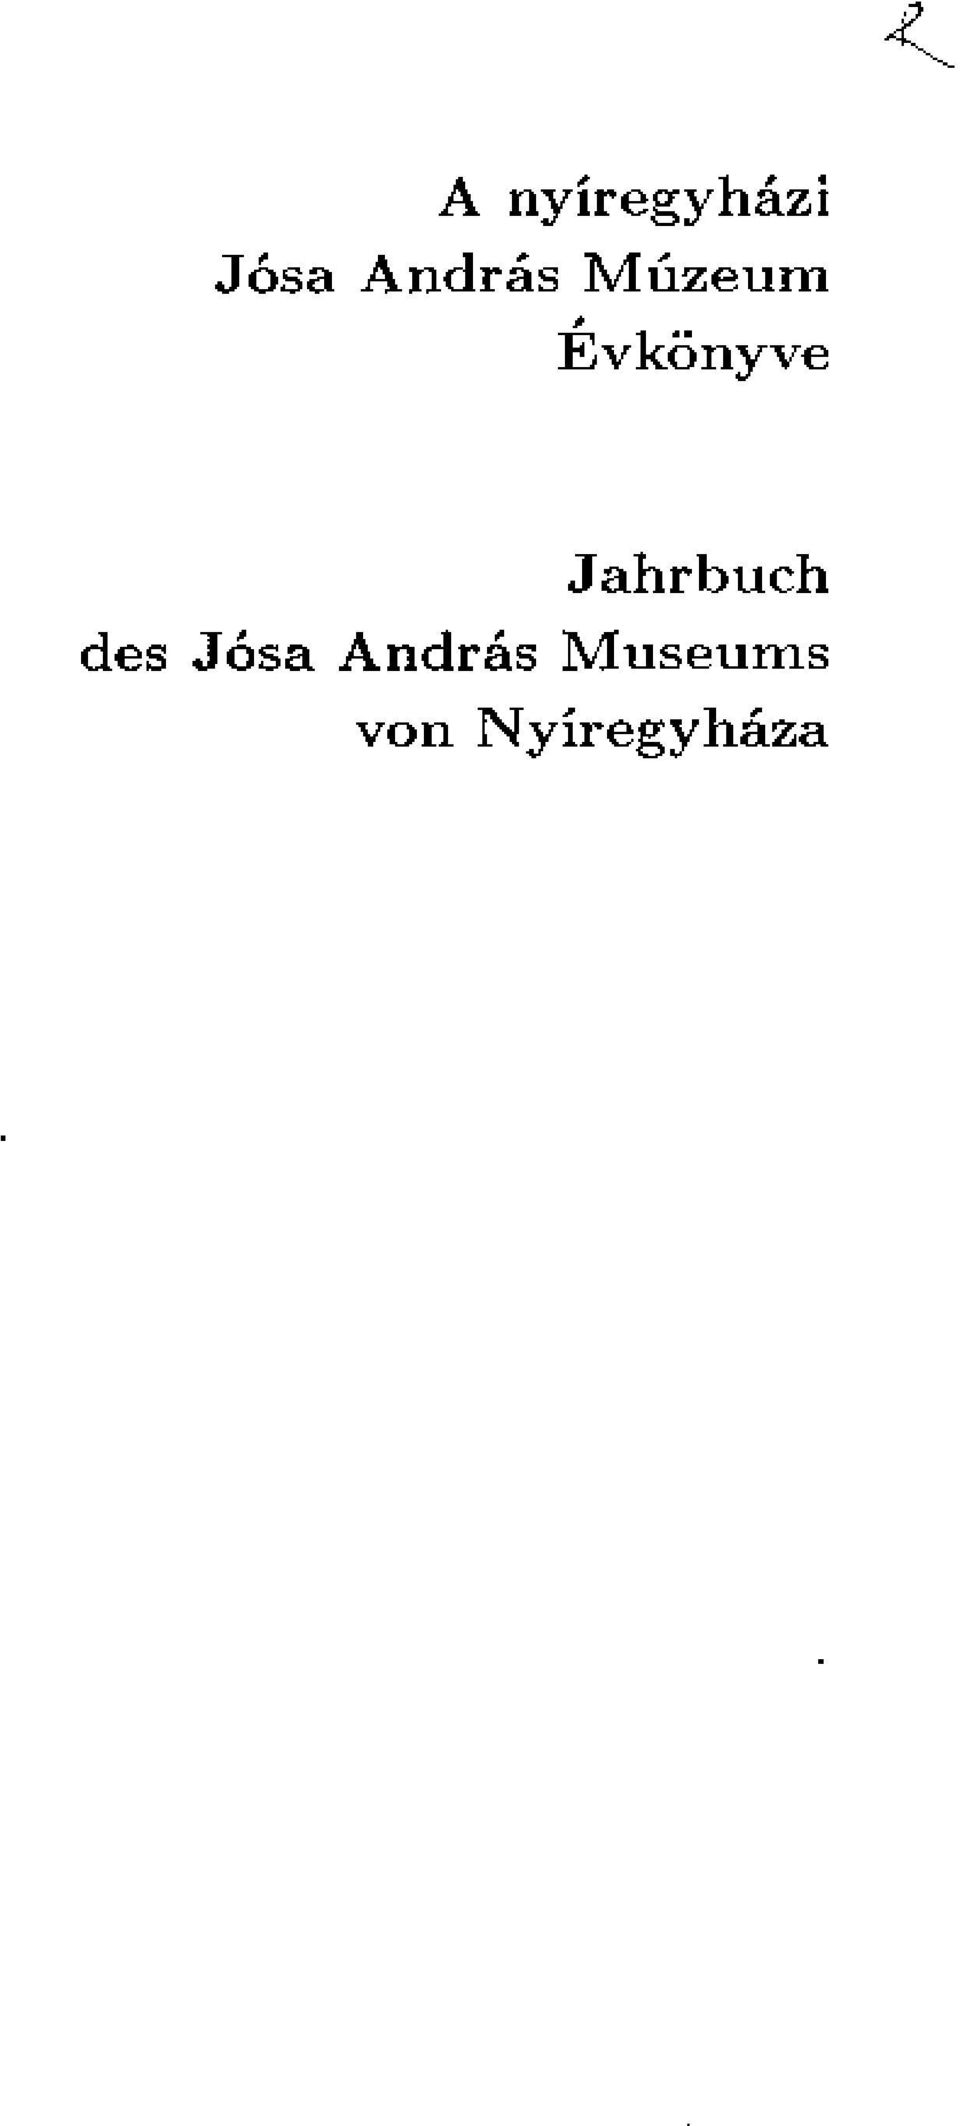 Jahrbuch des Jósa